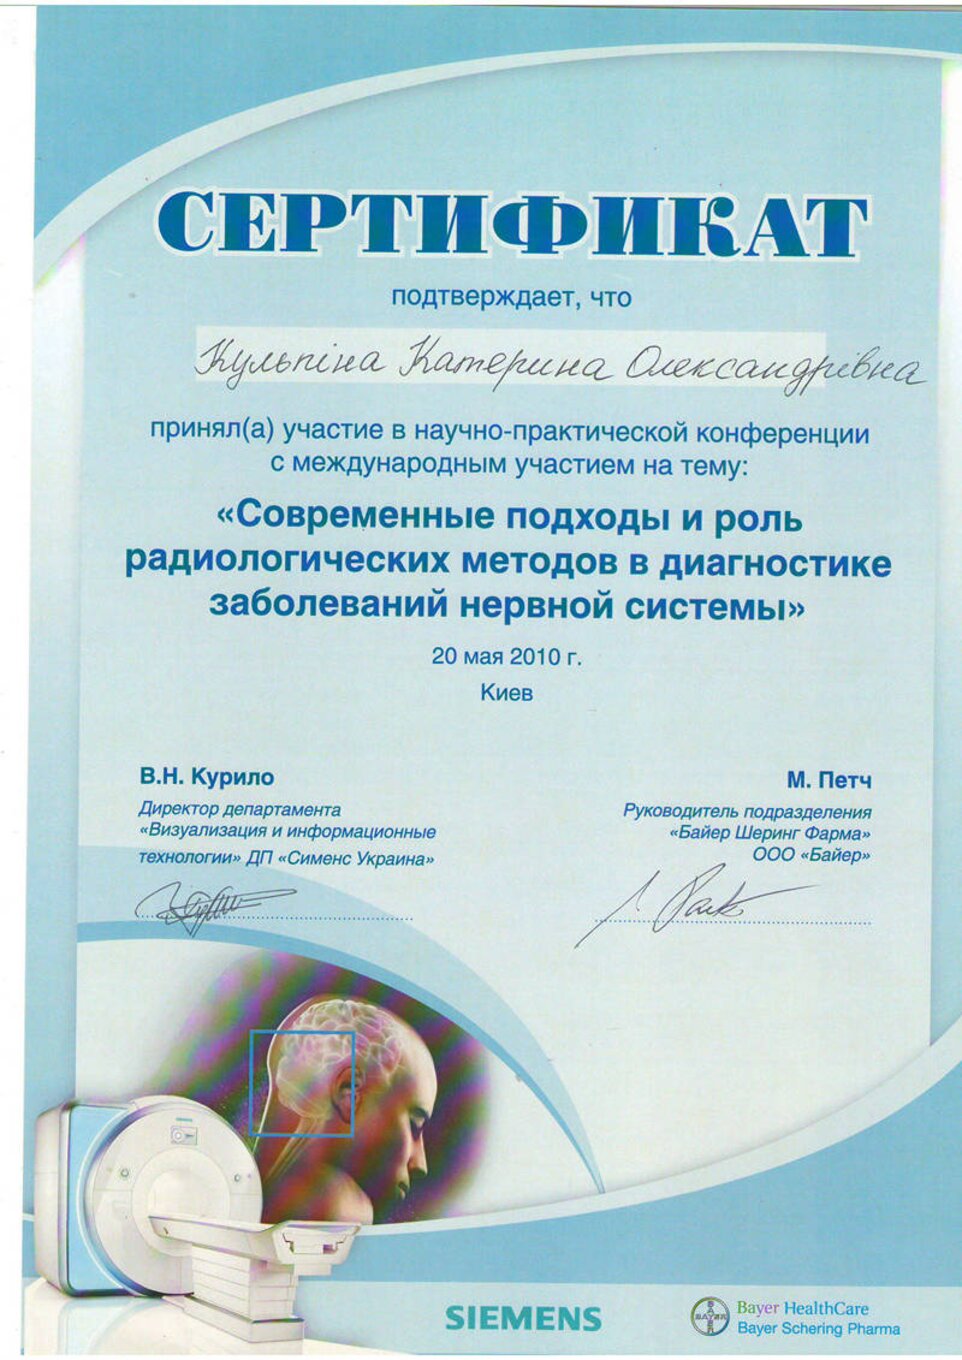 certificates/kulpina-katerina-oleksandrivna/hemomedika-cert-kulpina-2010-kiev-feofaniya.jpg